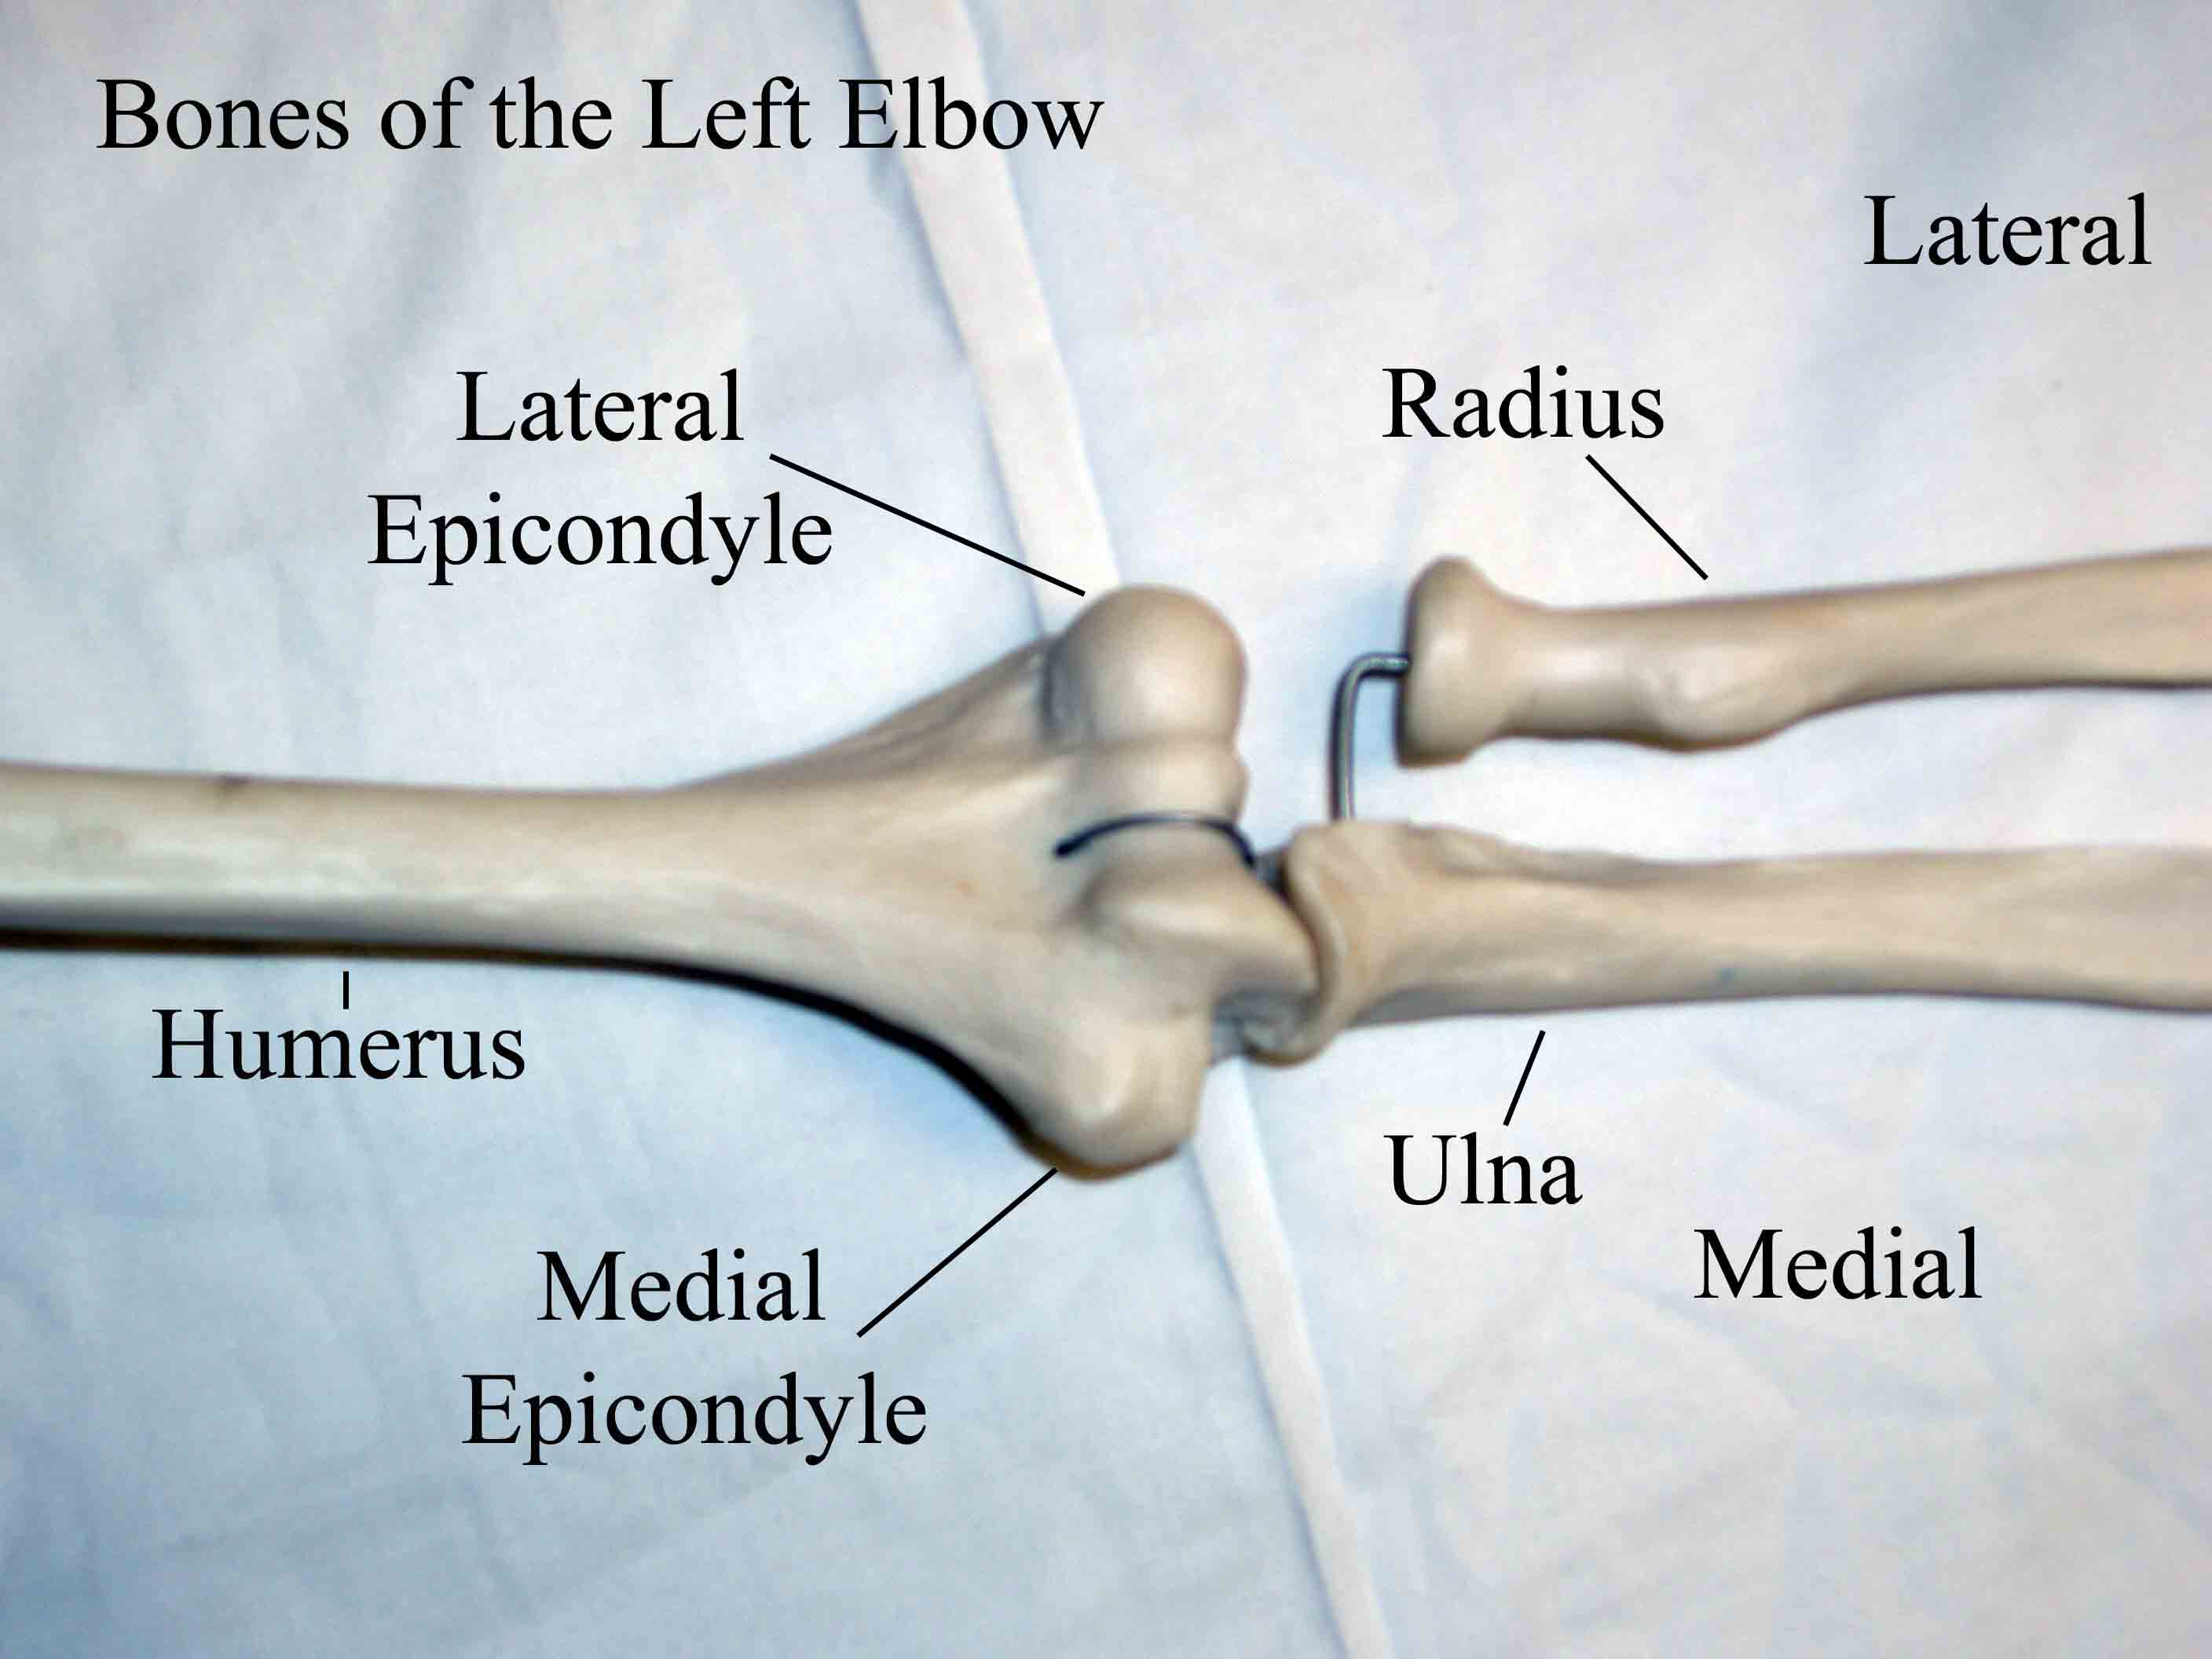 Elbow bones